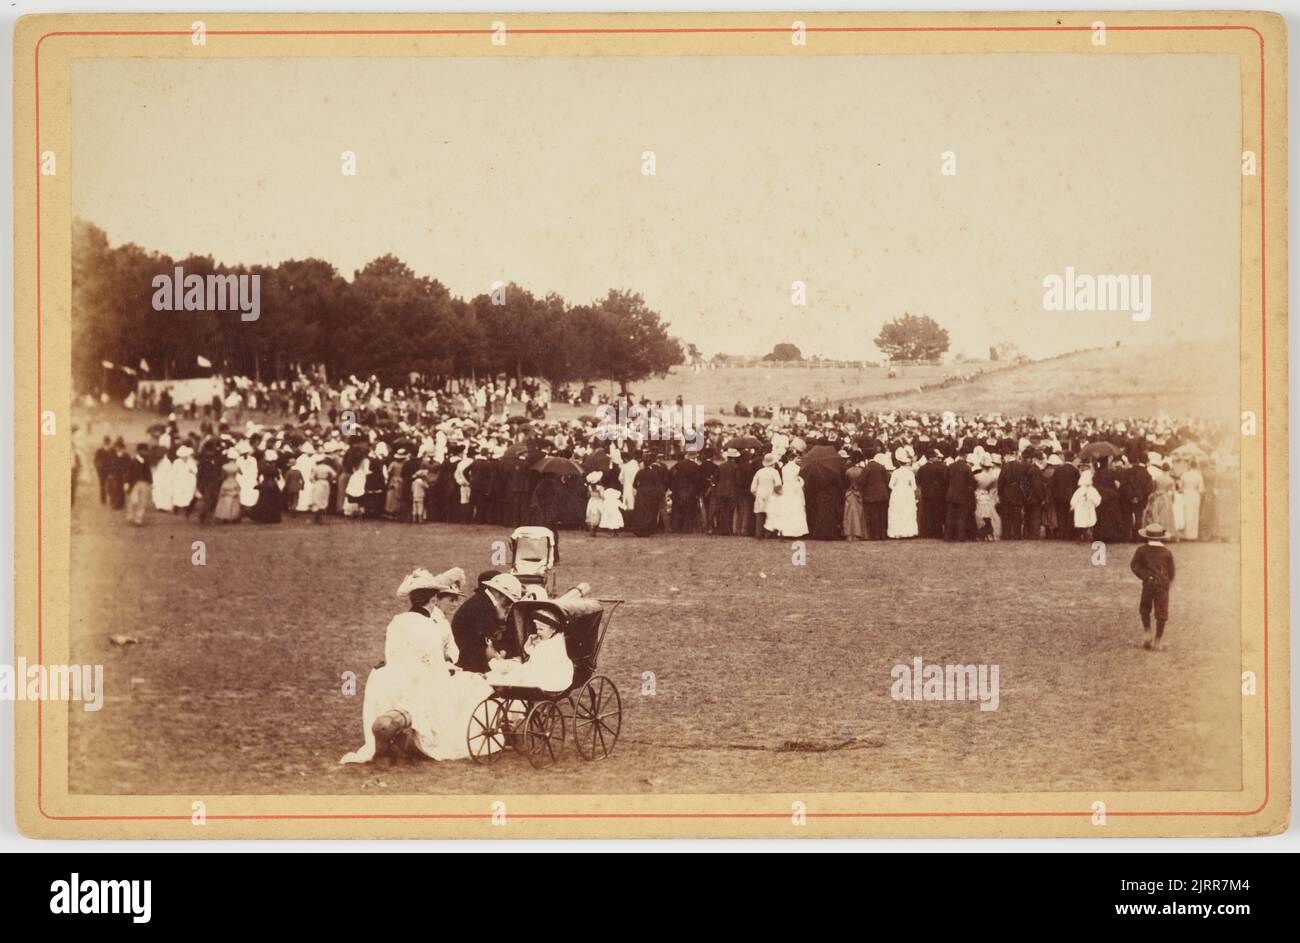 Domain Cricket Ground, Auckland, circa 1890, Auckland, by Edwin Willmott. Stock Photo